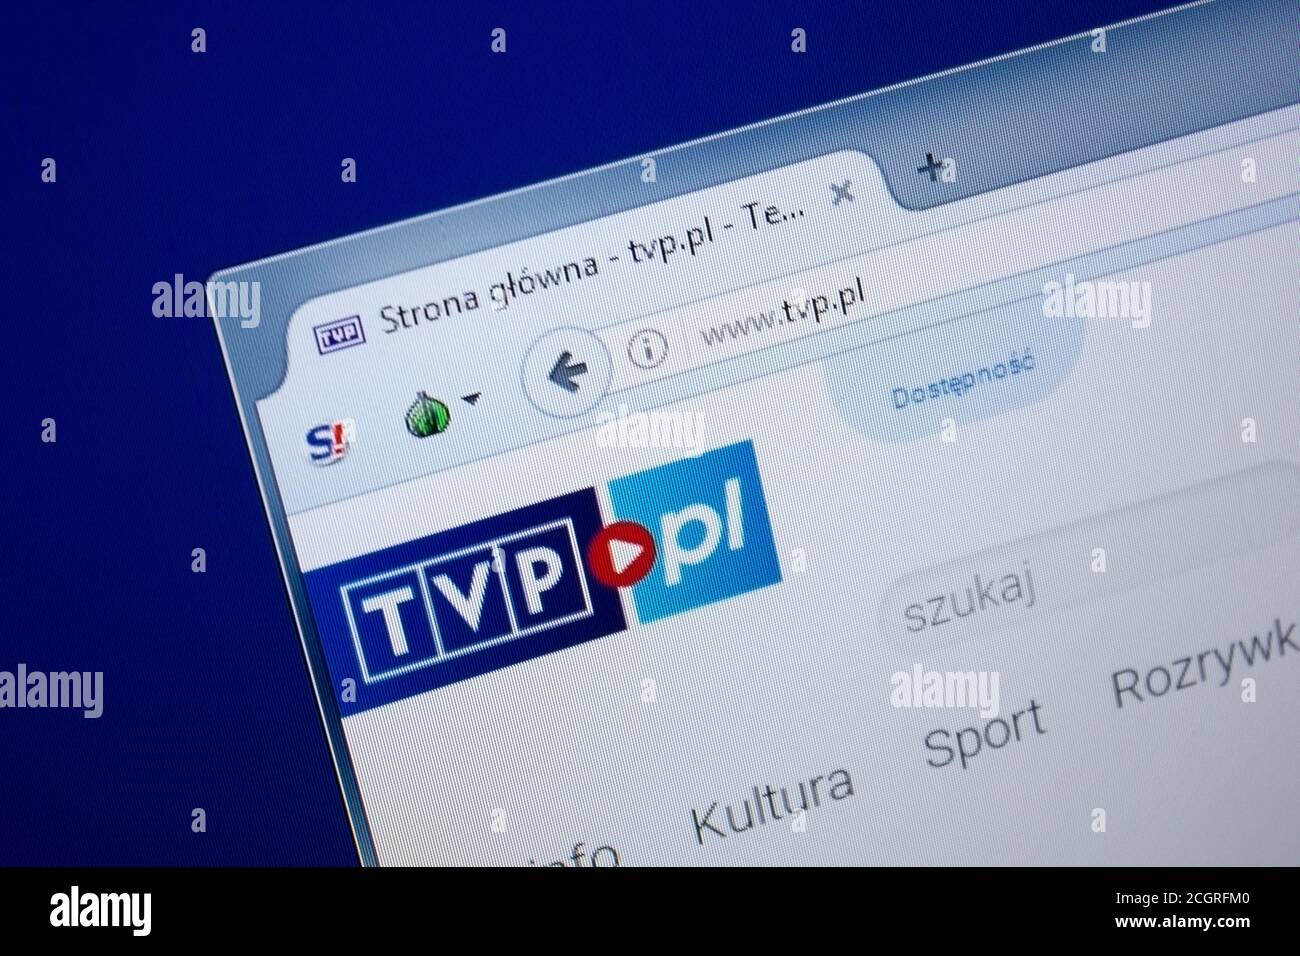 Ryazan, Russia - September 09, 2018: Homepage of Tvp website on the display of PC, url - Tvp.pl. Stock Photo